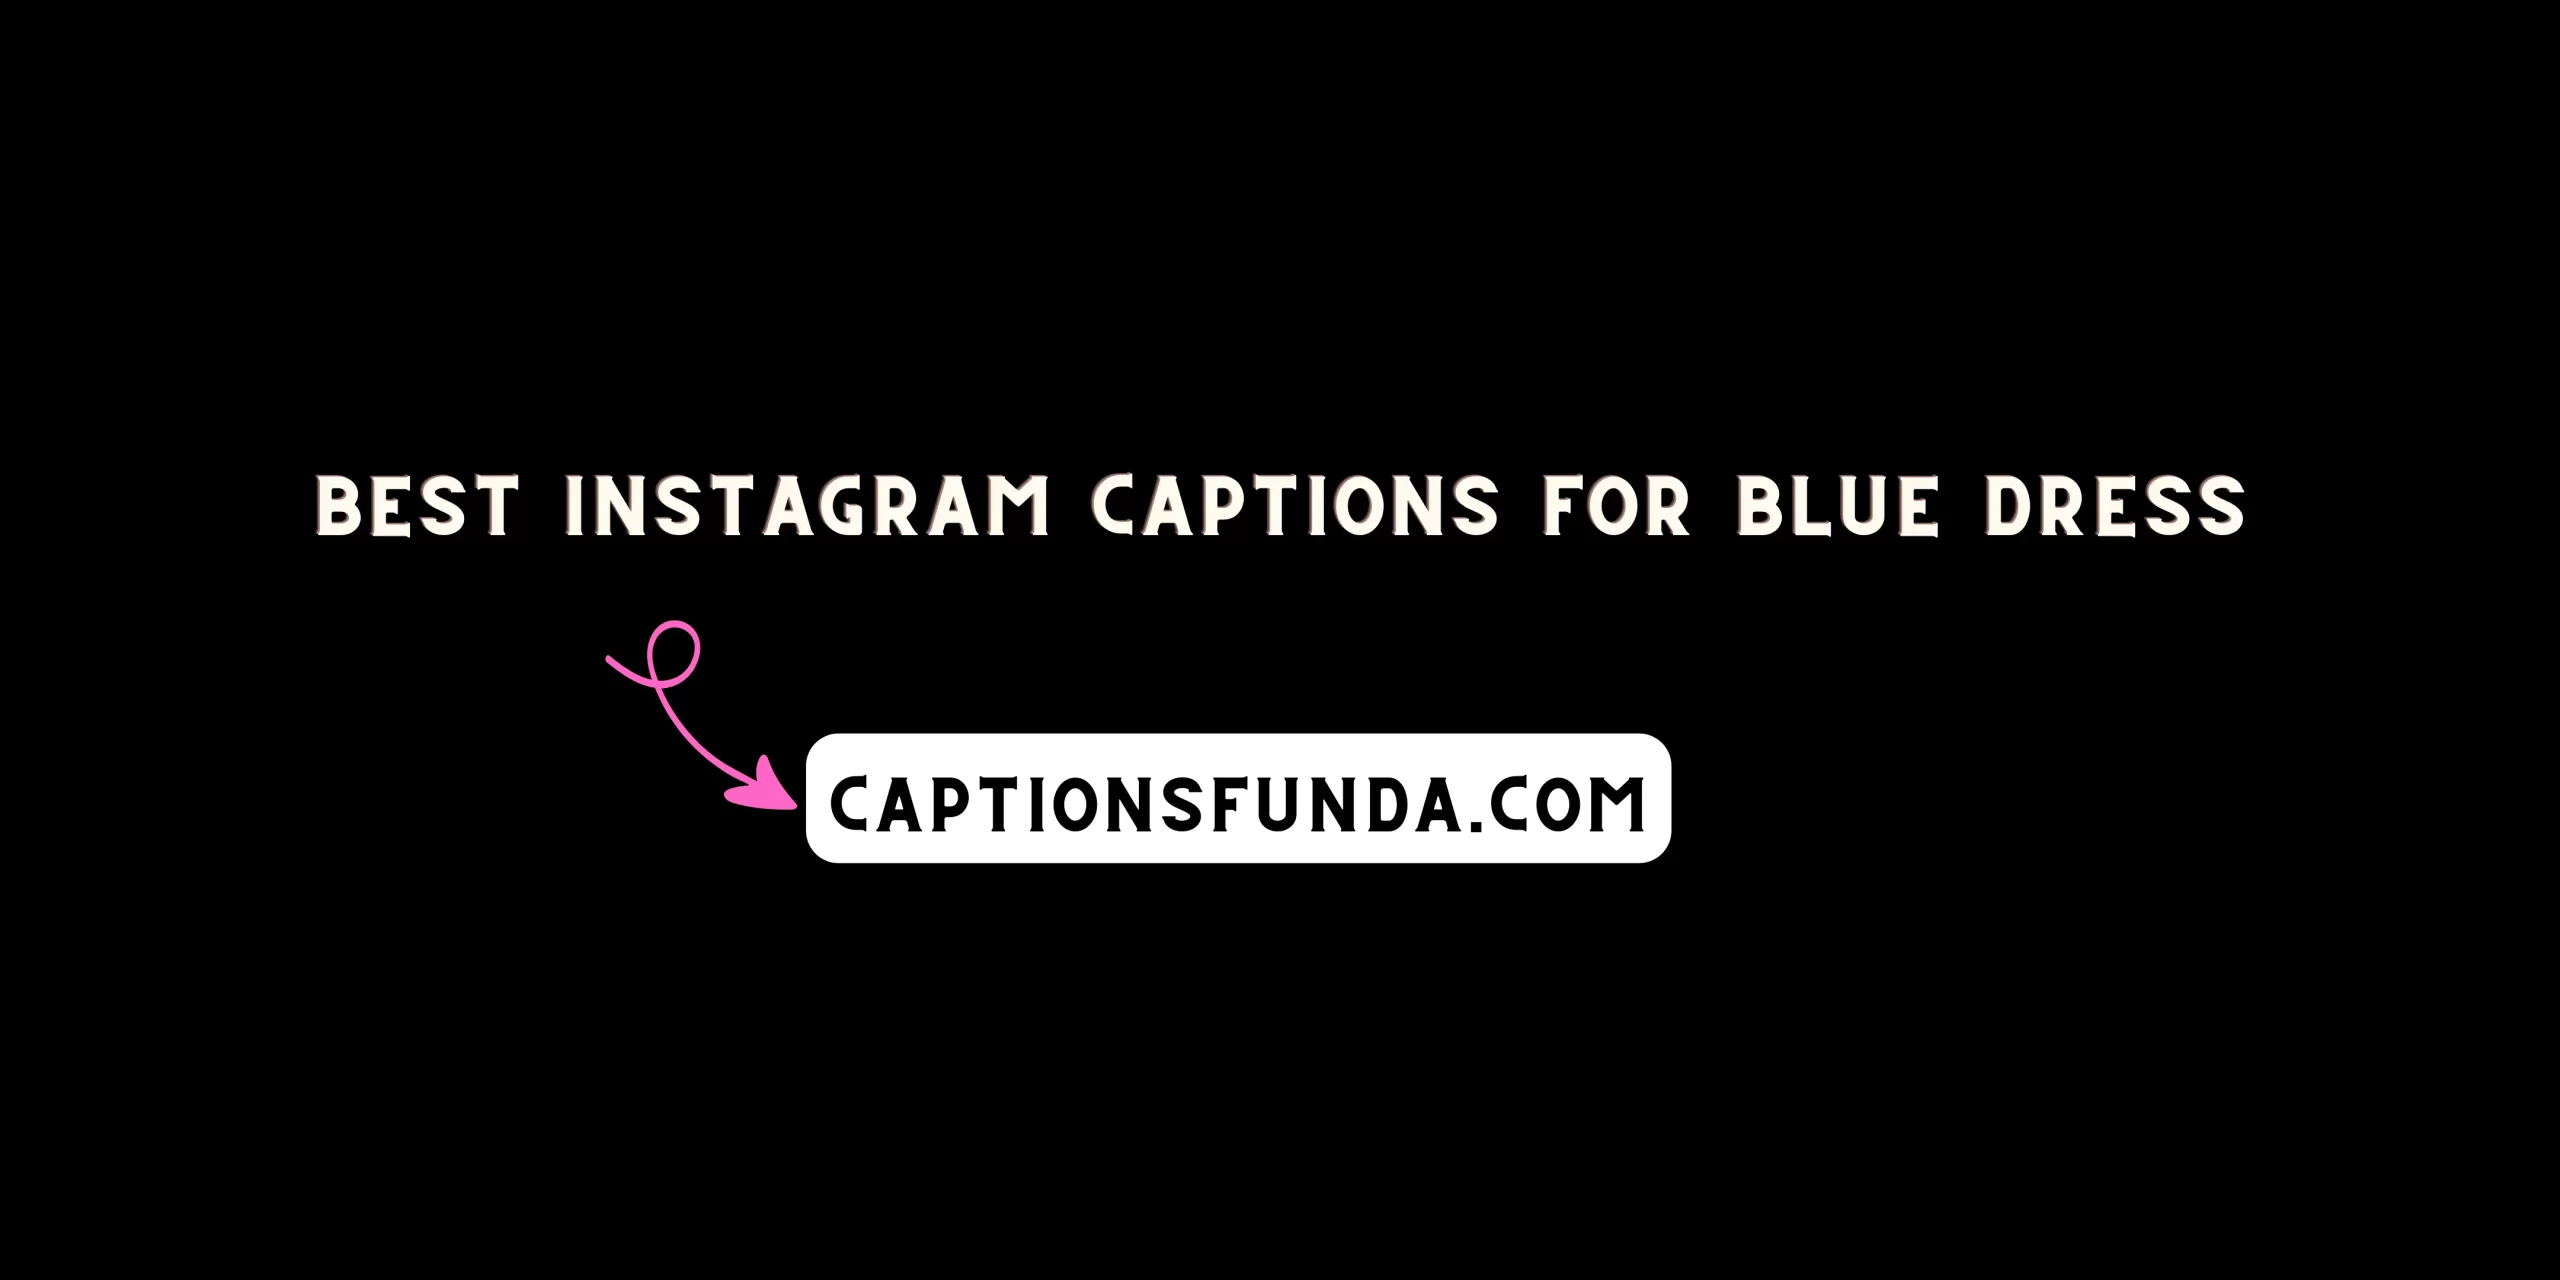 Best Instagram Captions For Blue Dress - CaptionsFunda